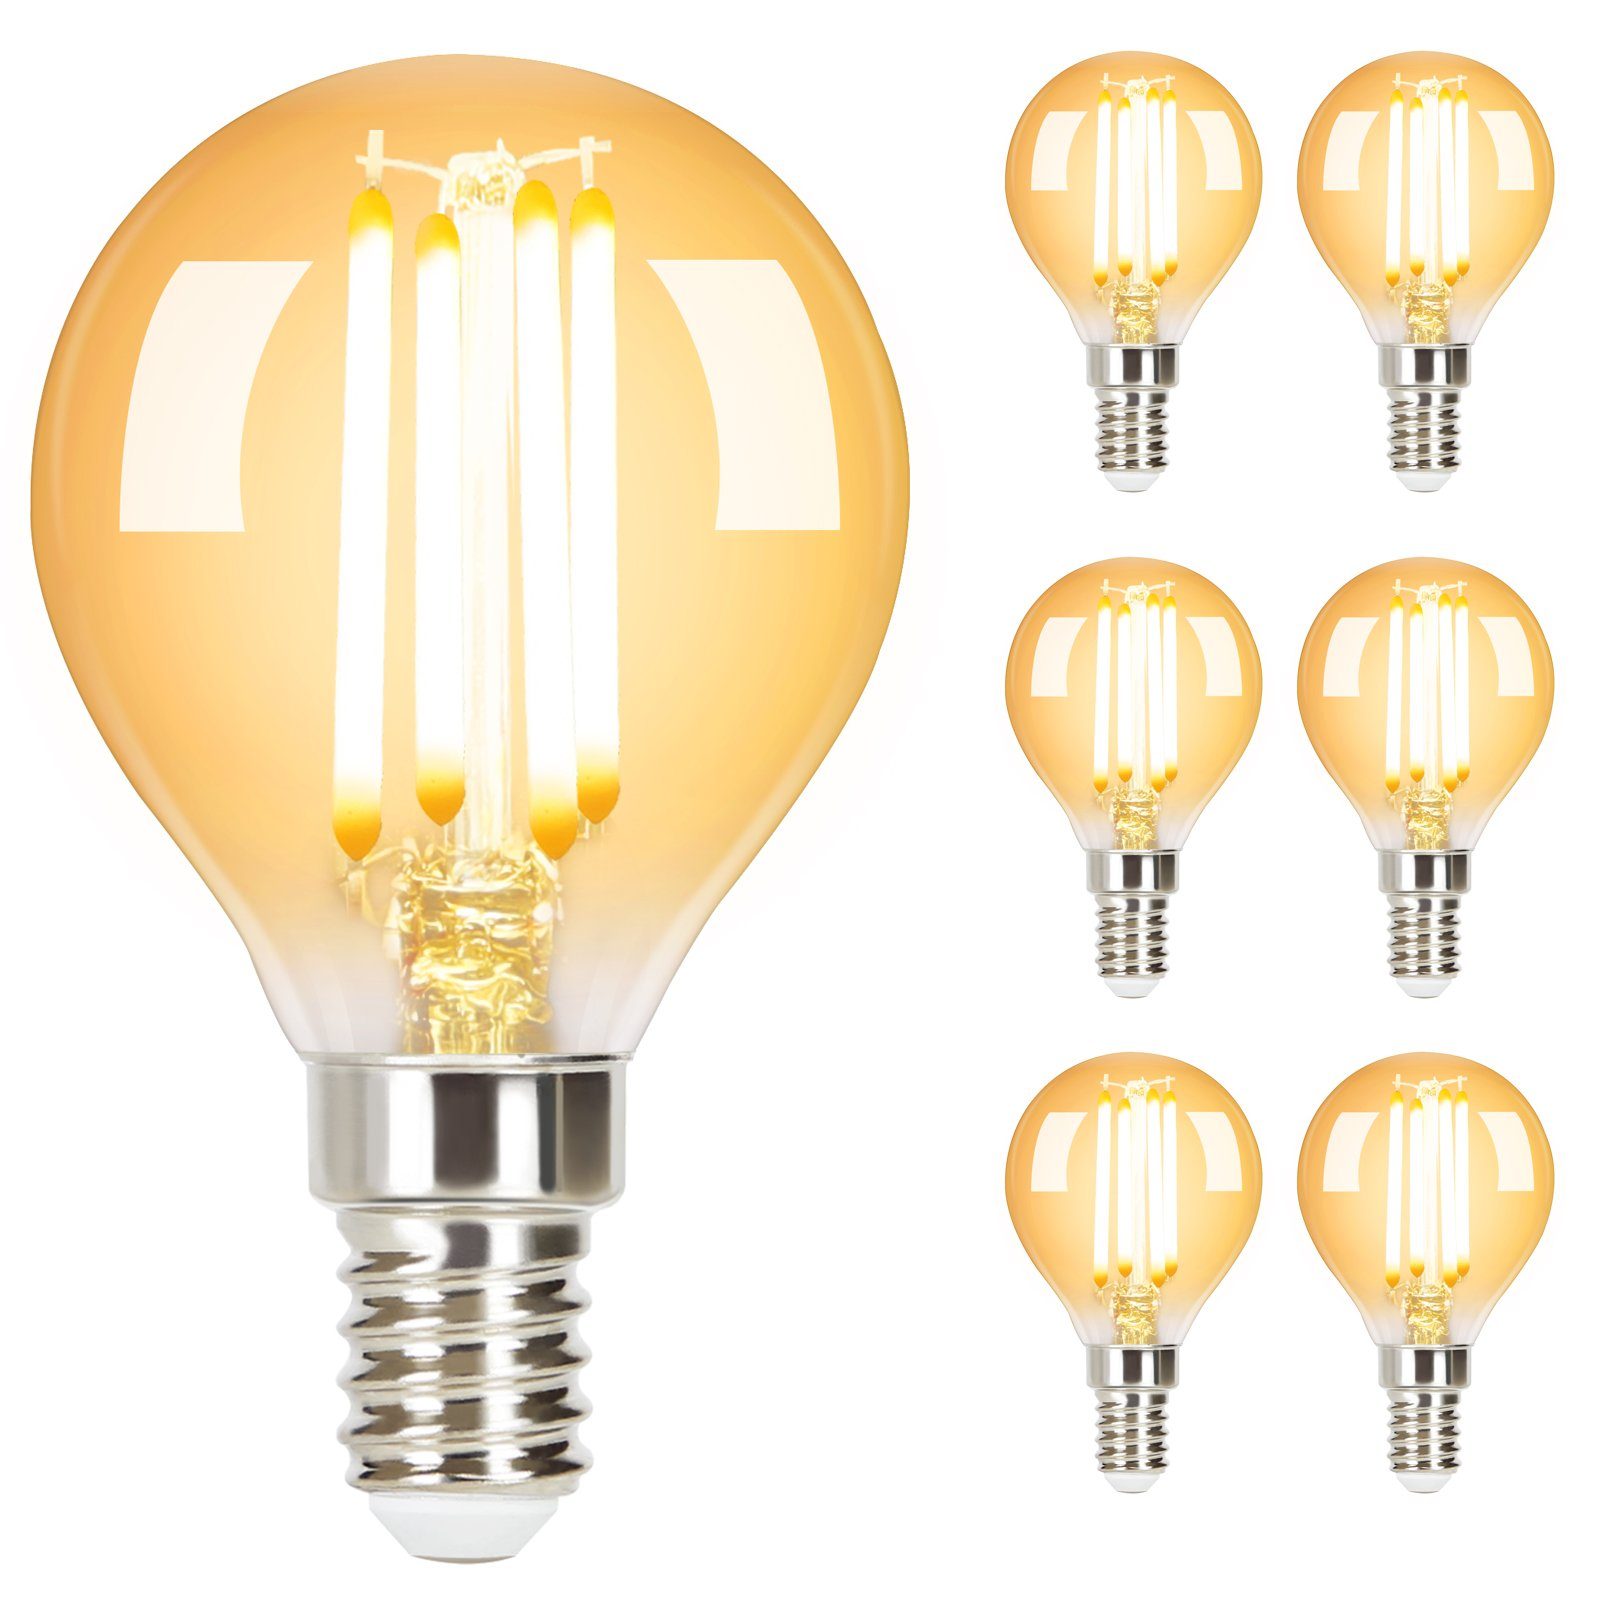 ZMH »Edison LED Vintage Glühbirne - G45 2700K« LED-Leuchtmittel, E14, 6  St., warmweiß, Filament Retro Glas Birne Energiesparlampe